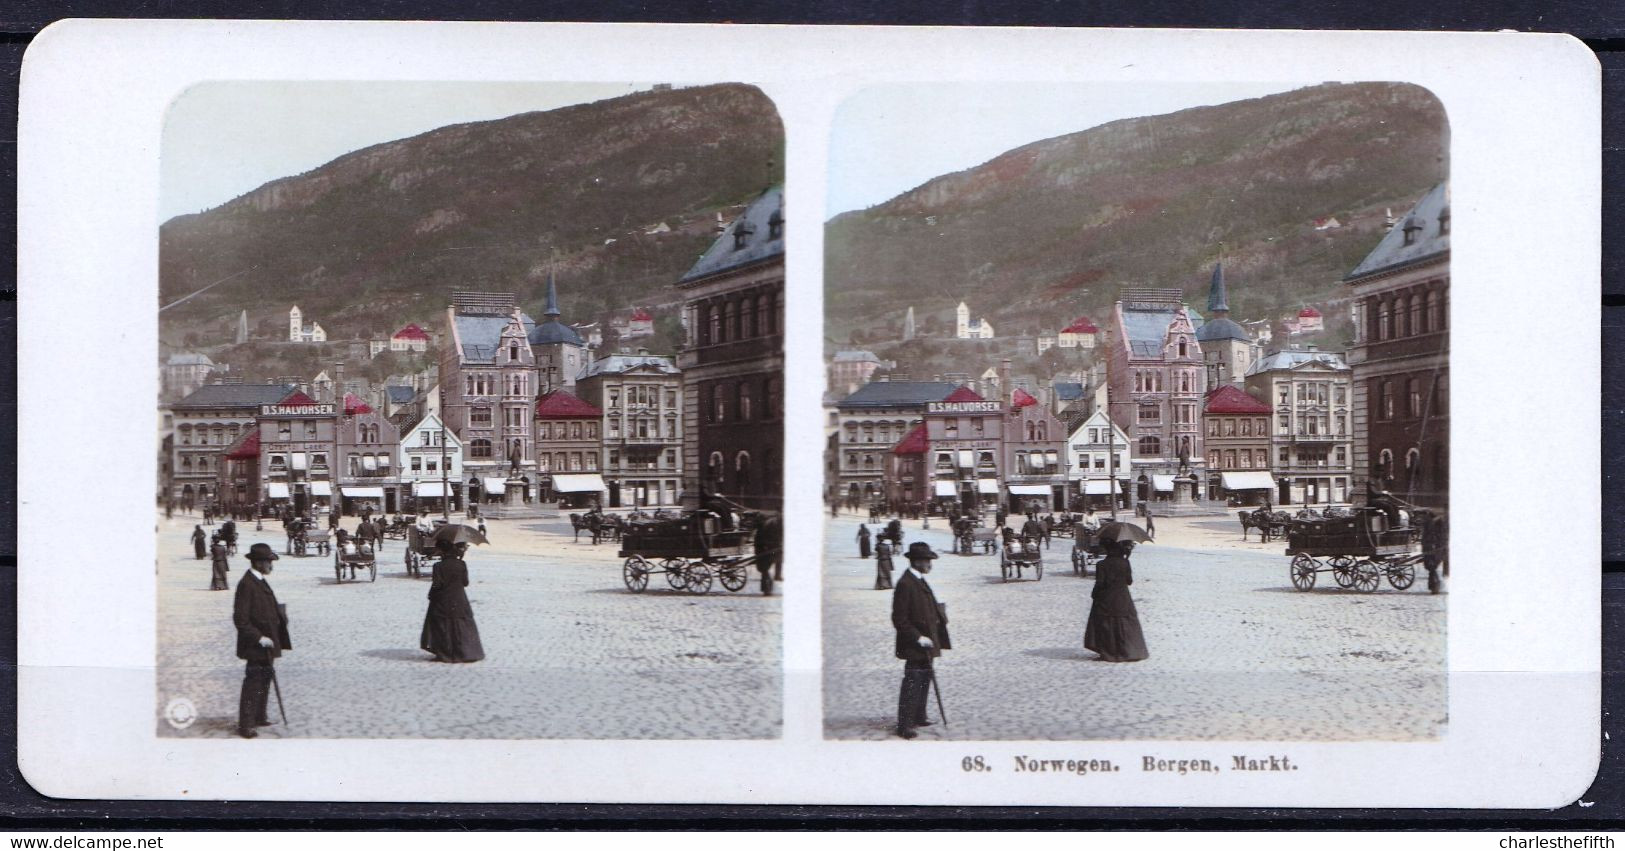 ORIGINAL STEREO PHOTO NORWAY - BERGEN MARKET - FIN 1800 - NICE ANIMATION - RARE !! IN COLOUR - Ancianas (antes De 1900)